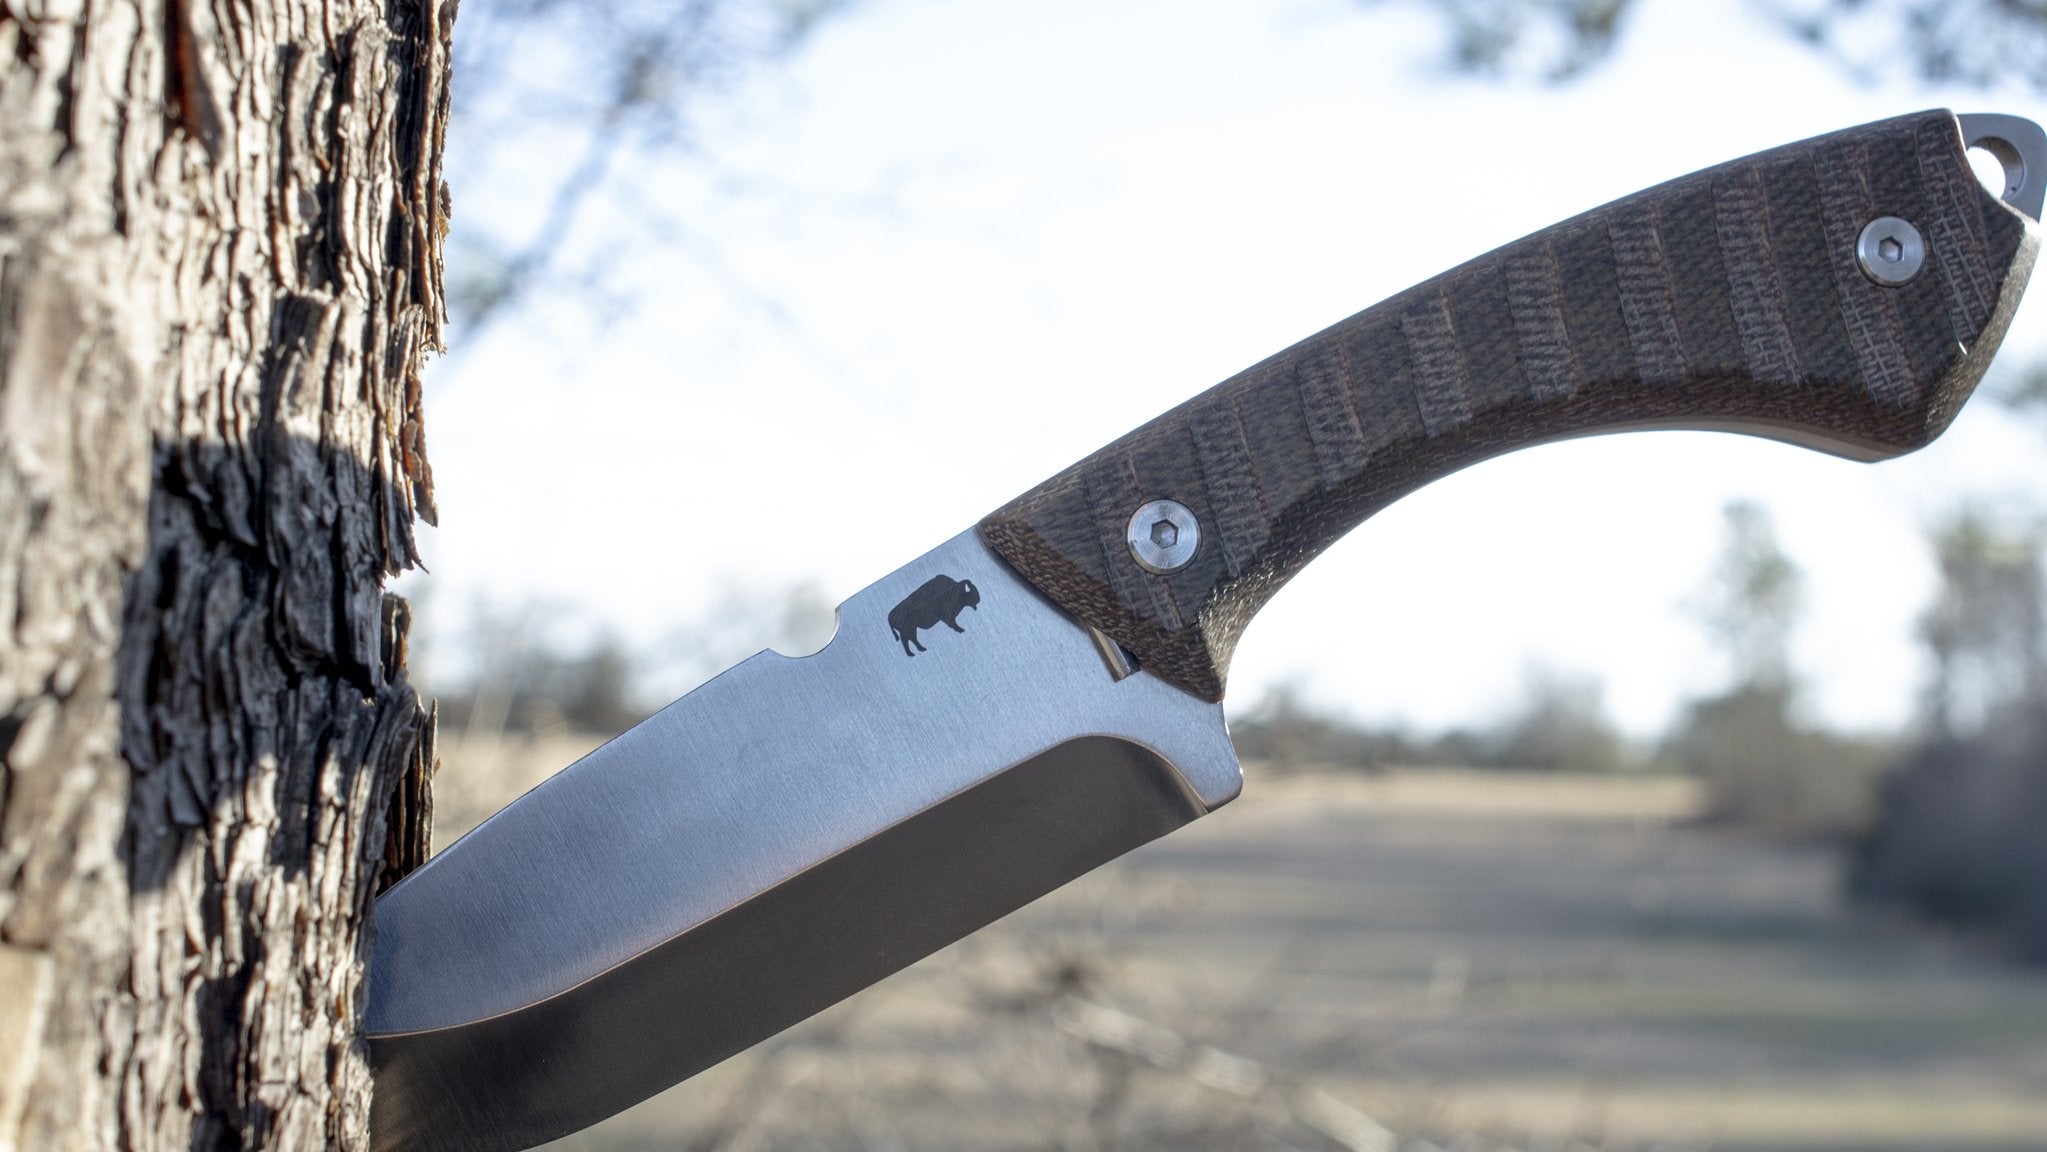 Lord & Field Frontiersman Survival Knife, 1095 Carbon Steel by Battlbox.com